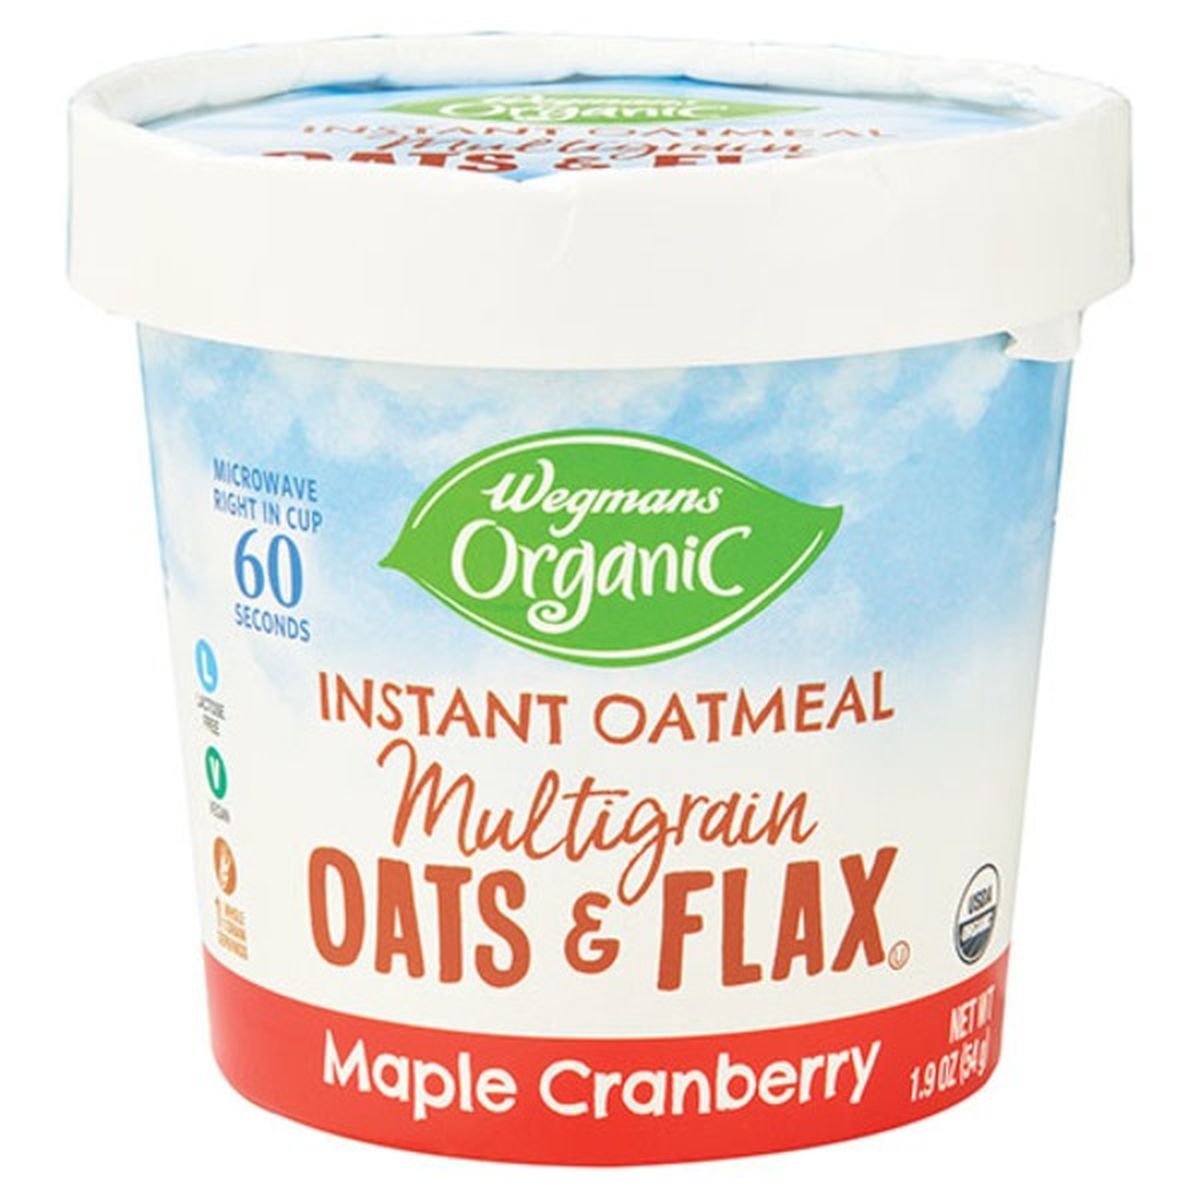 Calories in Wegmans Organic Maple Cranberry Oats & Flax Instant Oatmeal